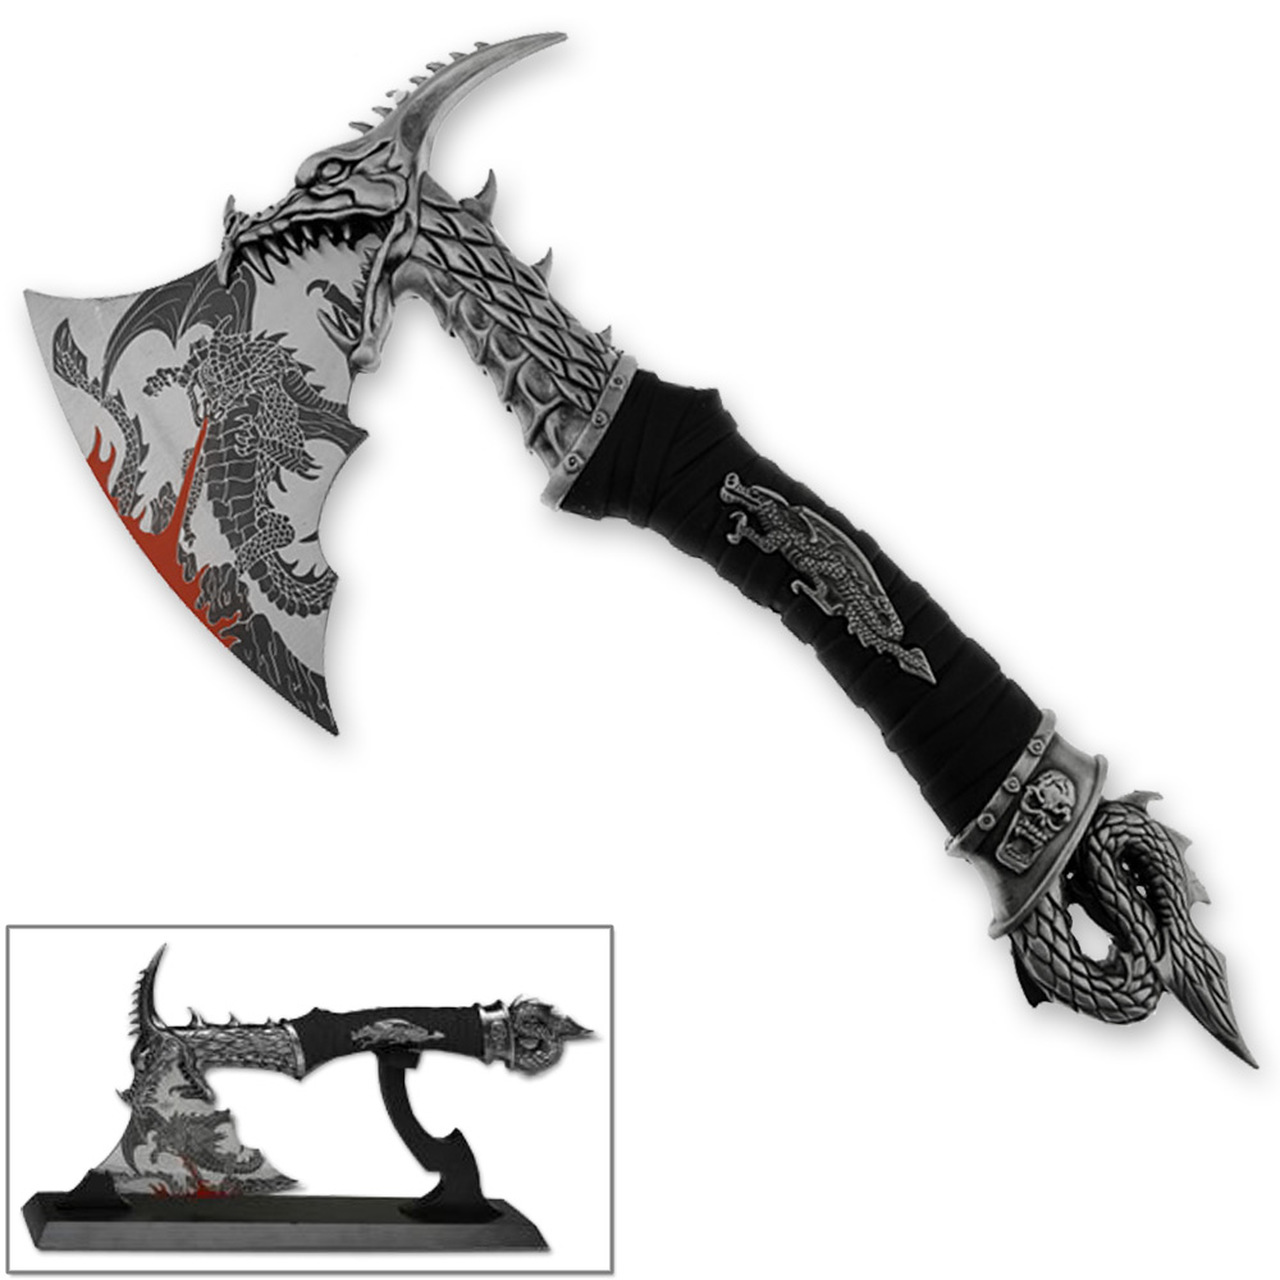 Swords Blades Uk Sword Knives Martial Arts Samurai Samuri Lord Rings Movie Collectables